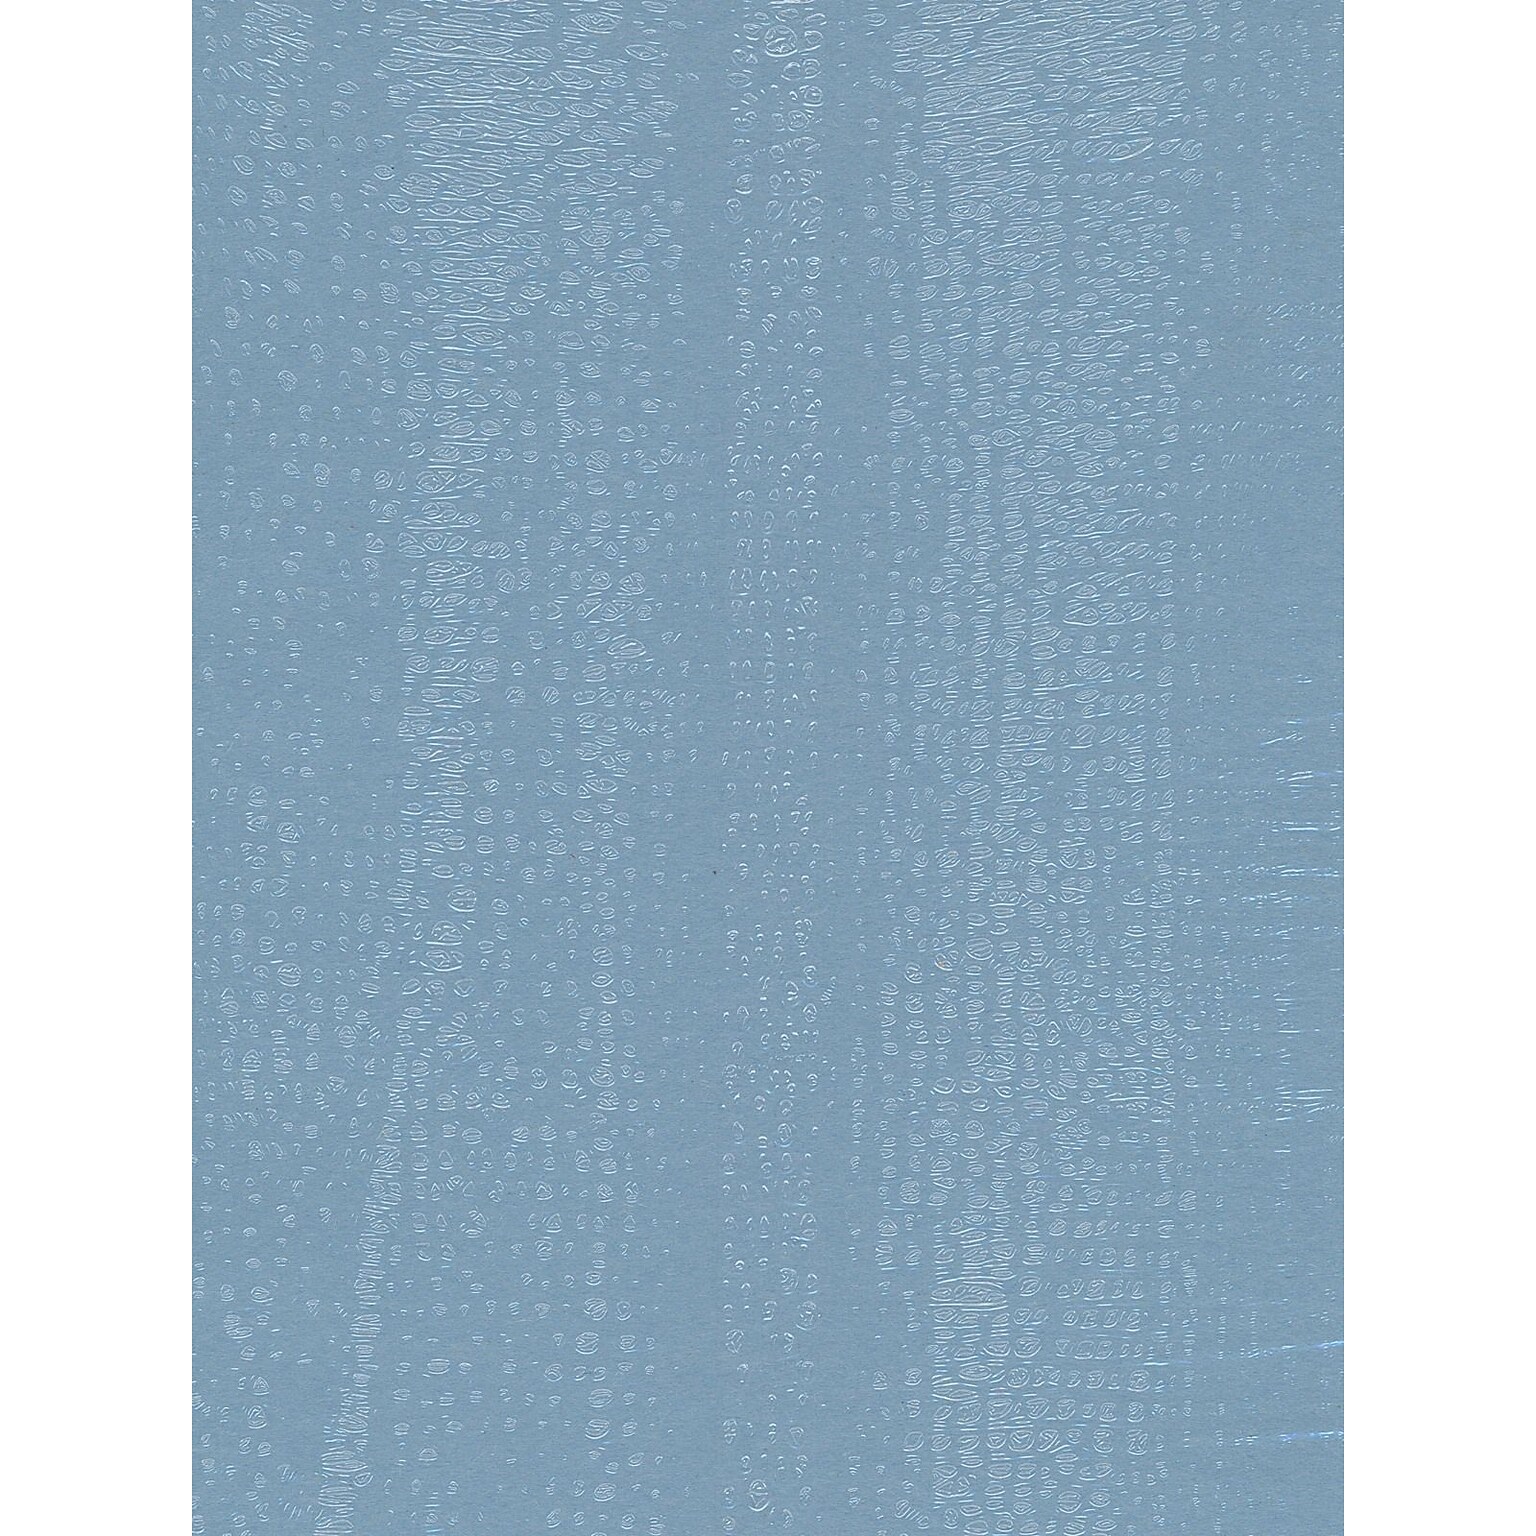 Pacon Sunworks Construction Paper Sky Blue 12 x 18, 50 Sheets, 5/Pack  (5PK-7607)